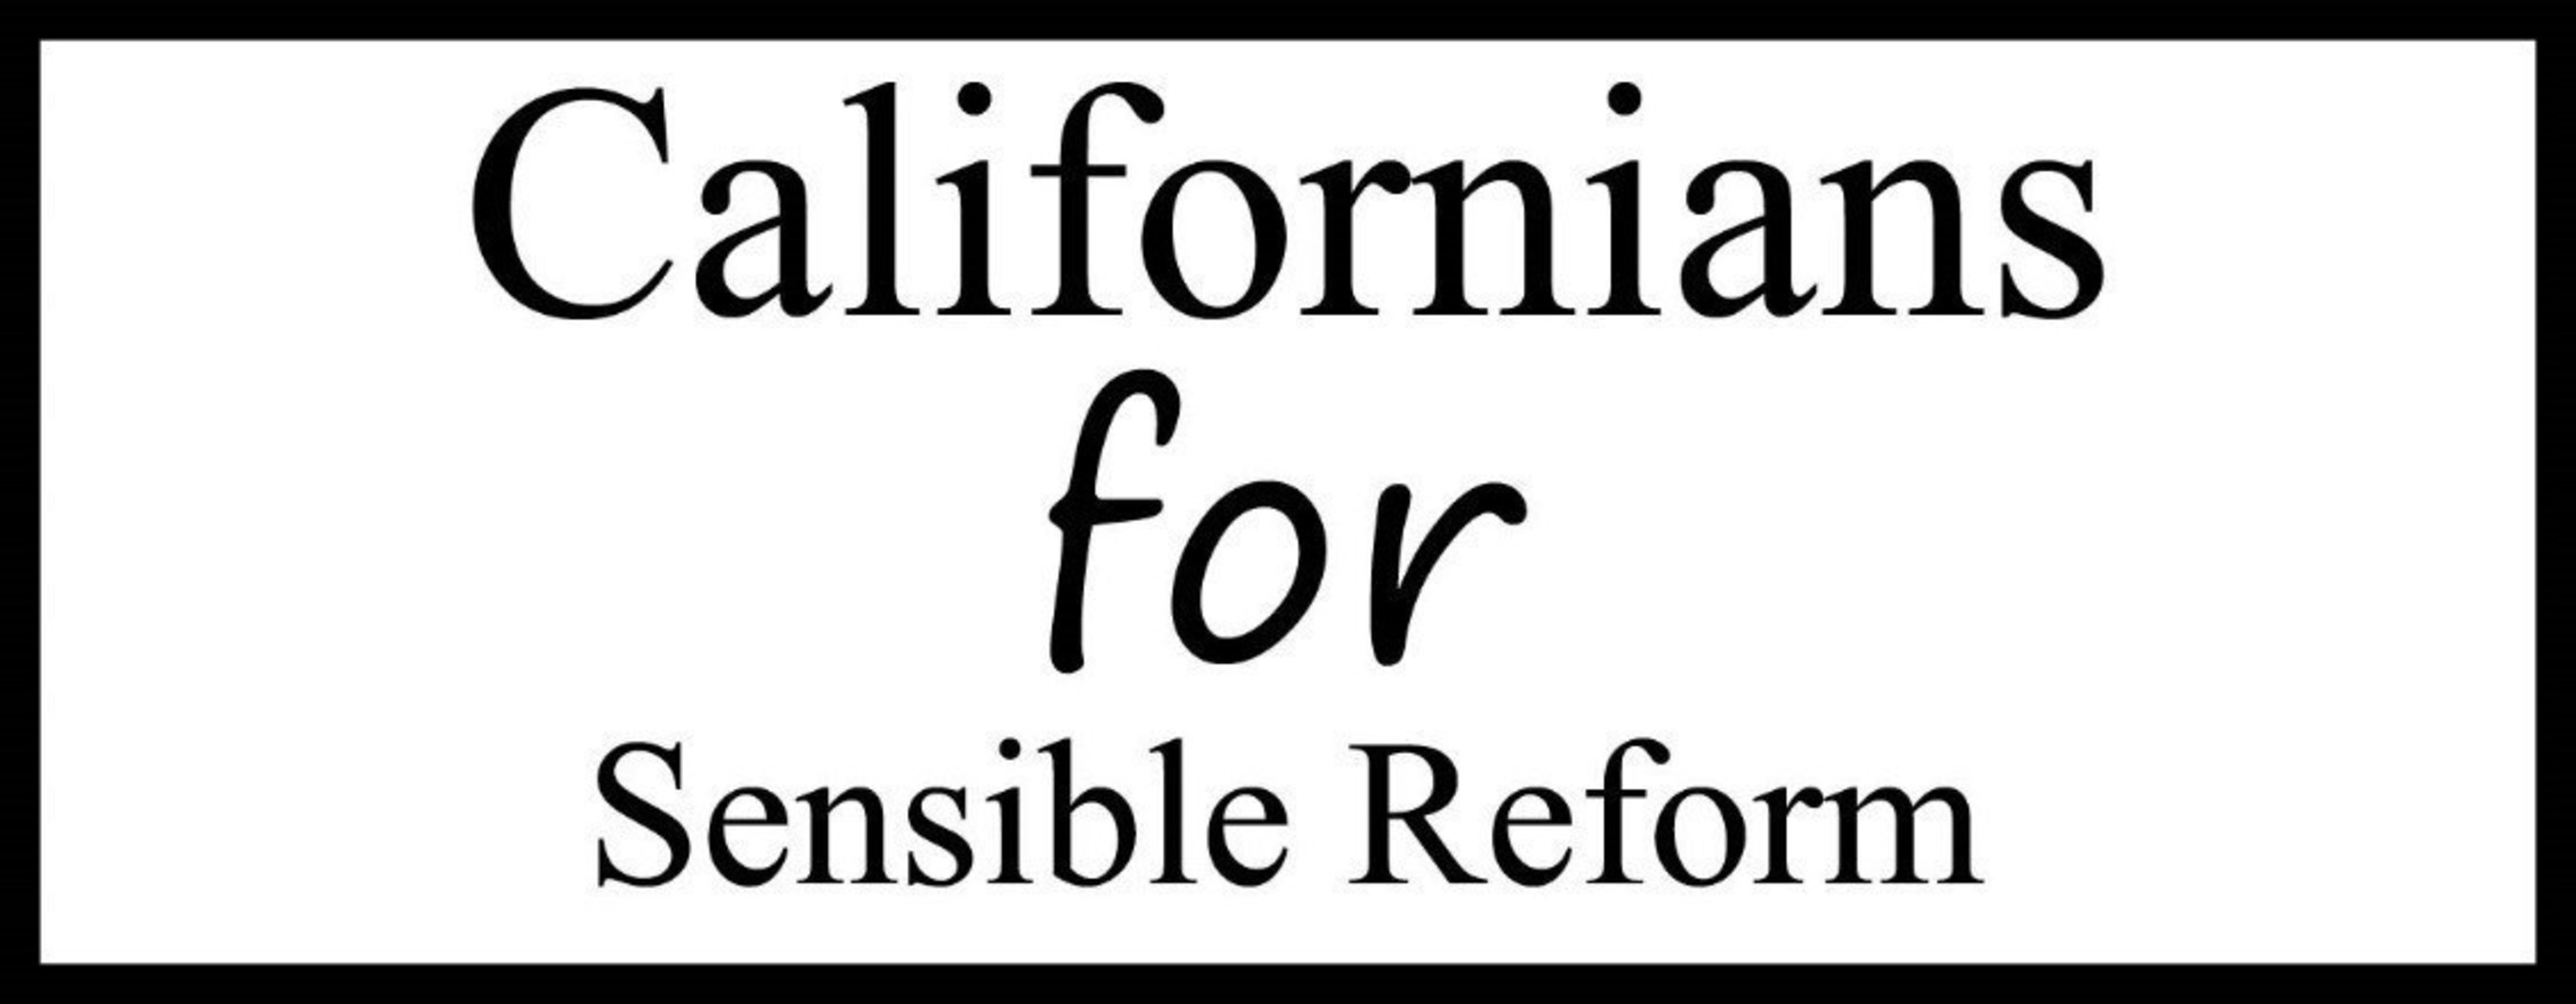 Californians for Sensible Reform logo